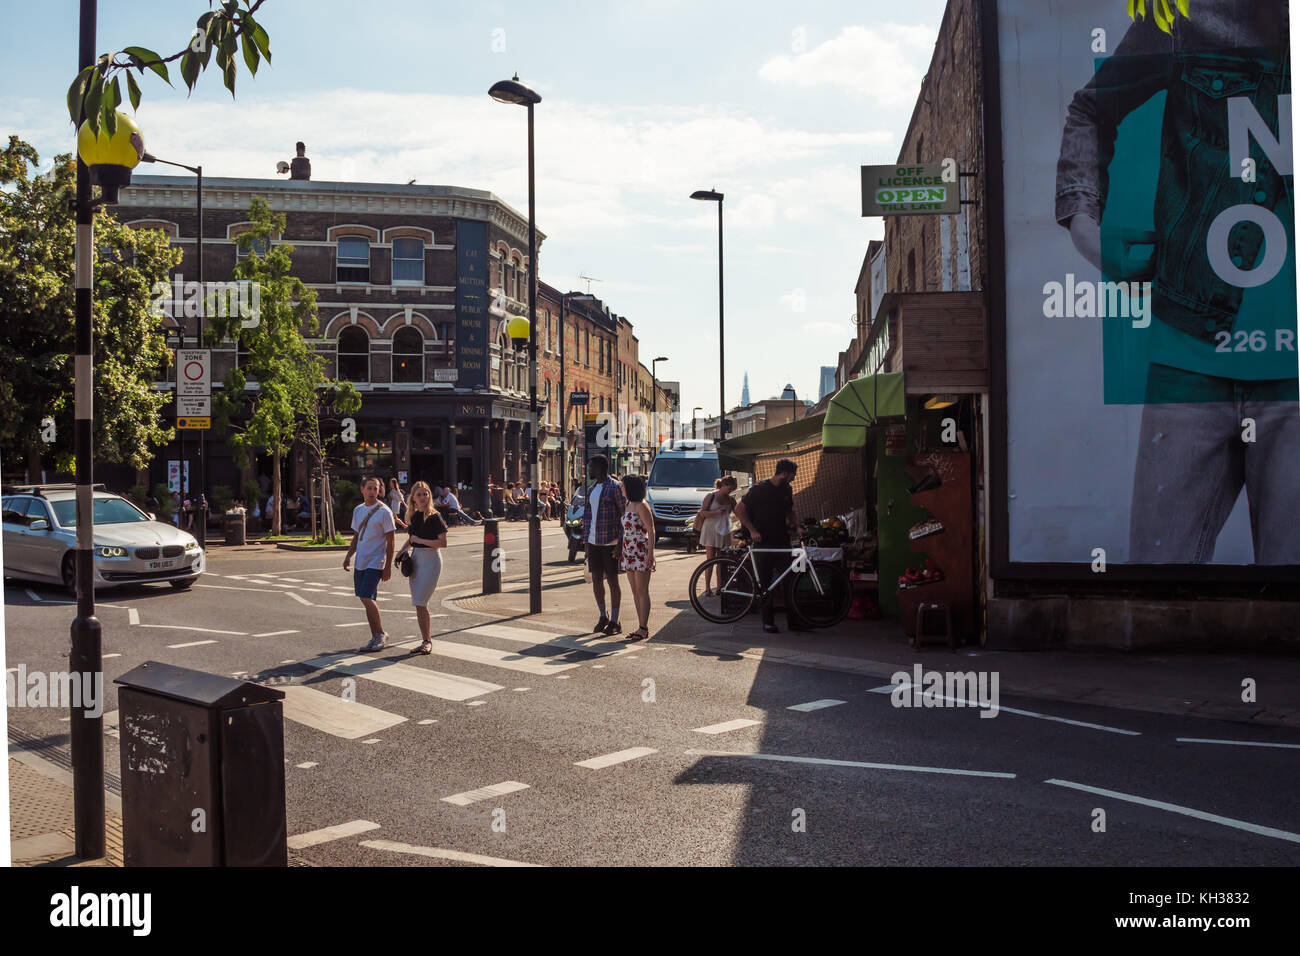 The crossing by Broadway Market in London Fields, Hackney. Taken on a sunny August day. Stock Photo